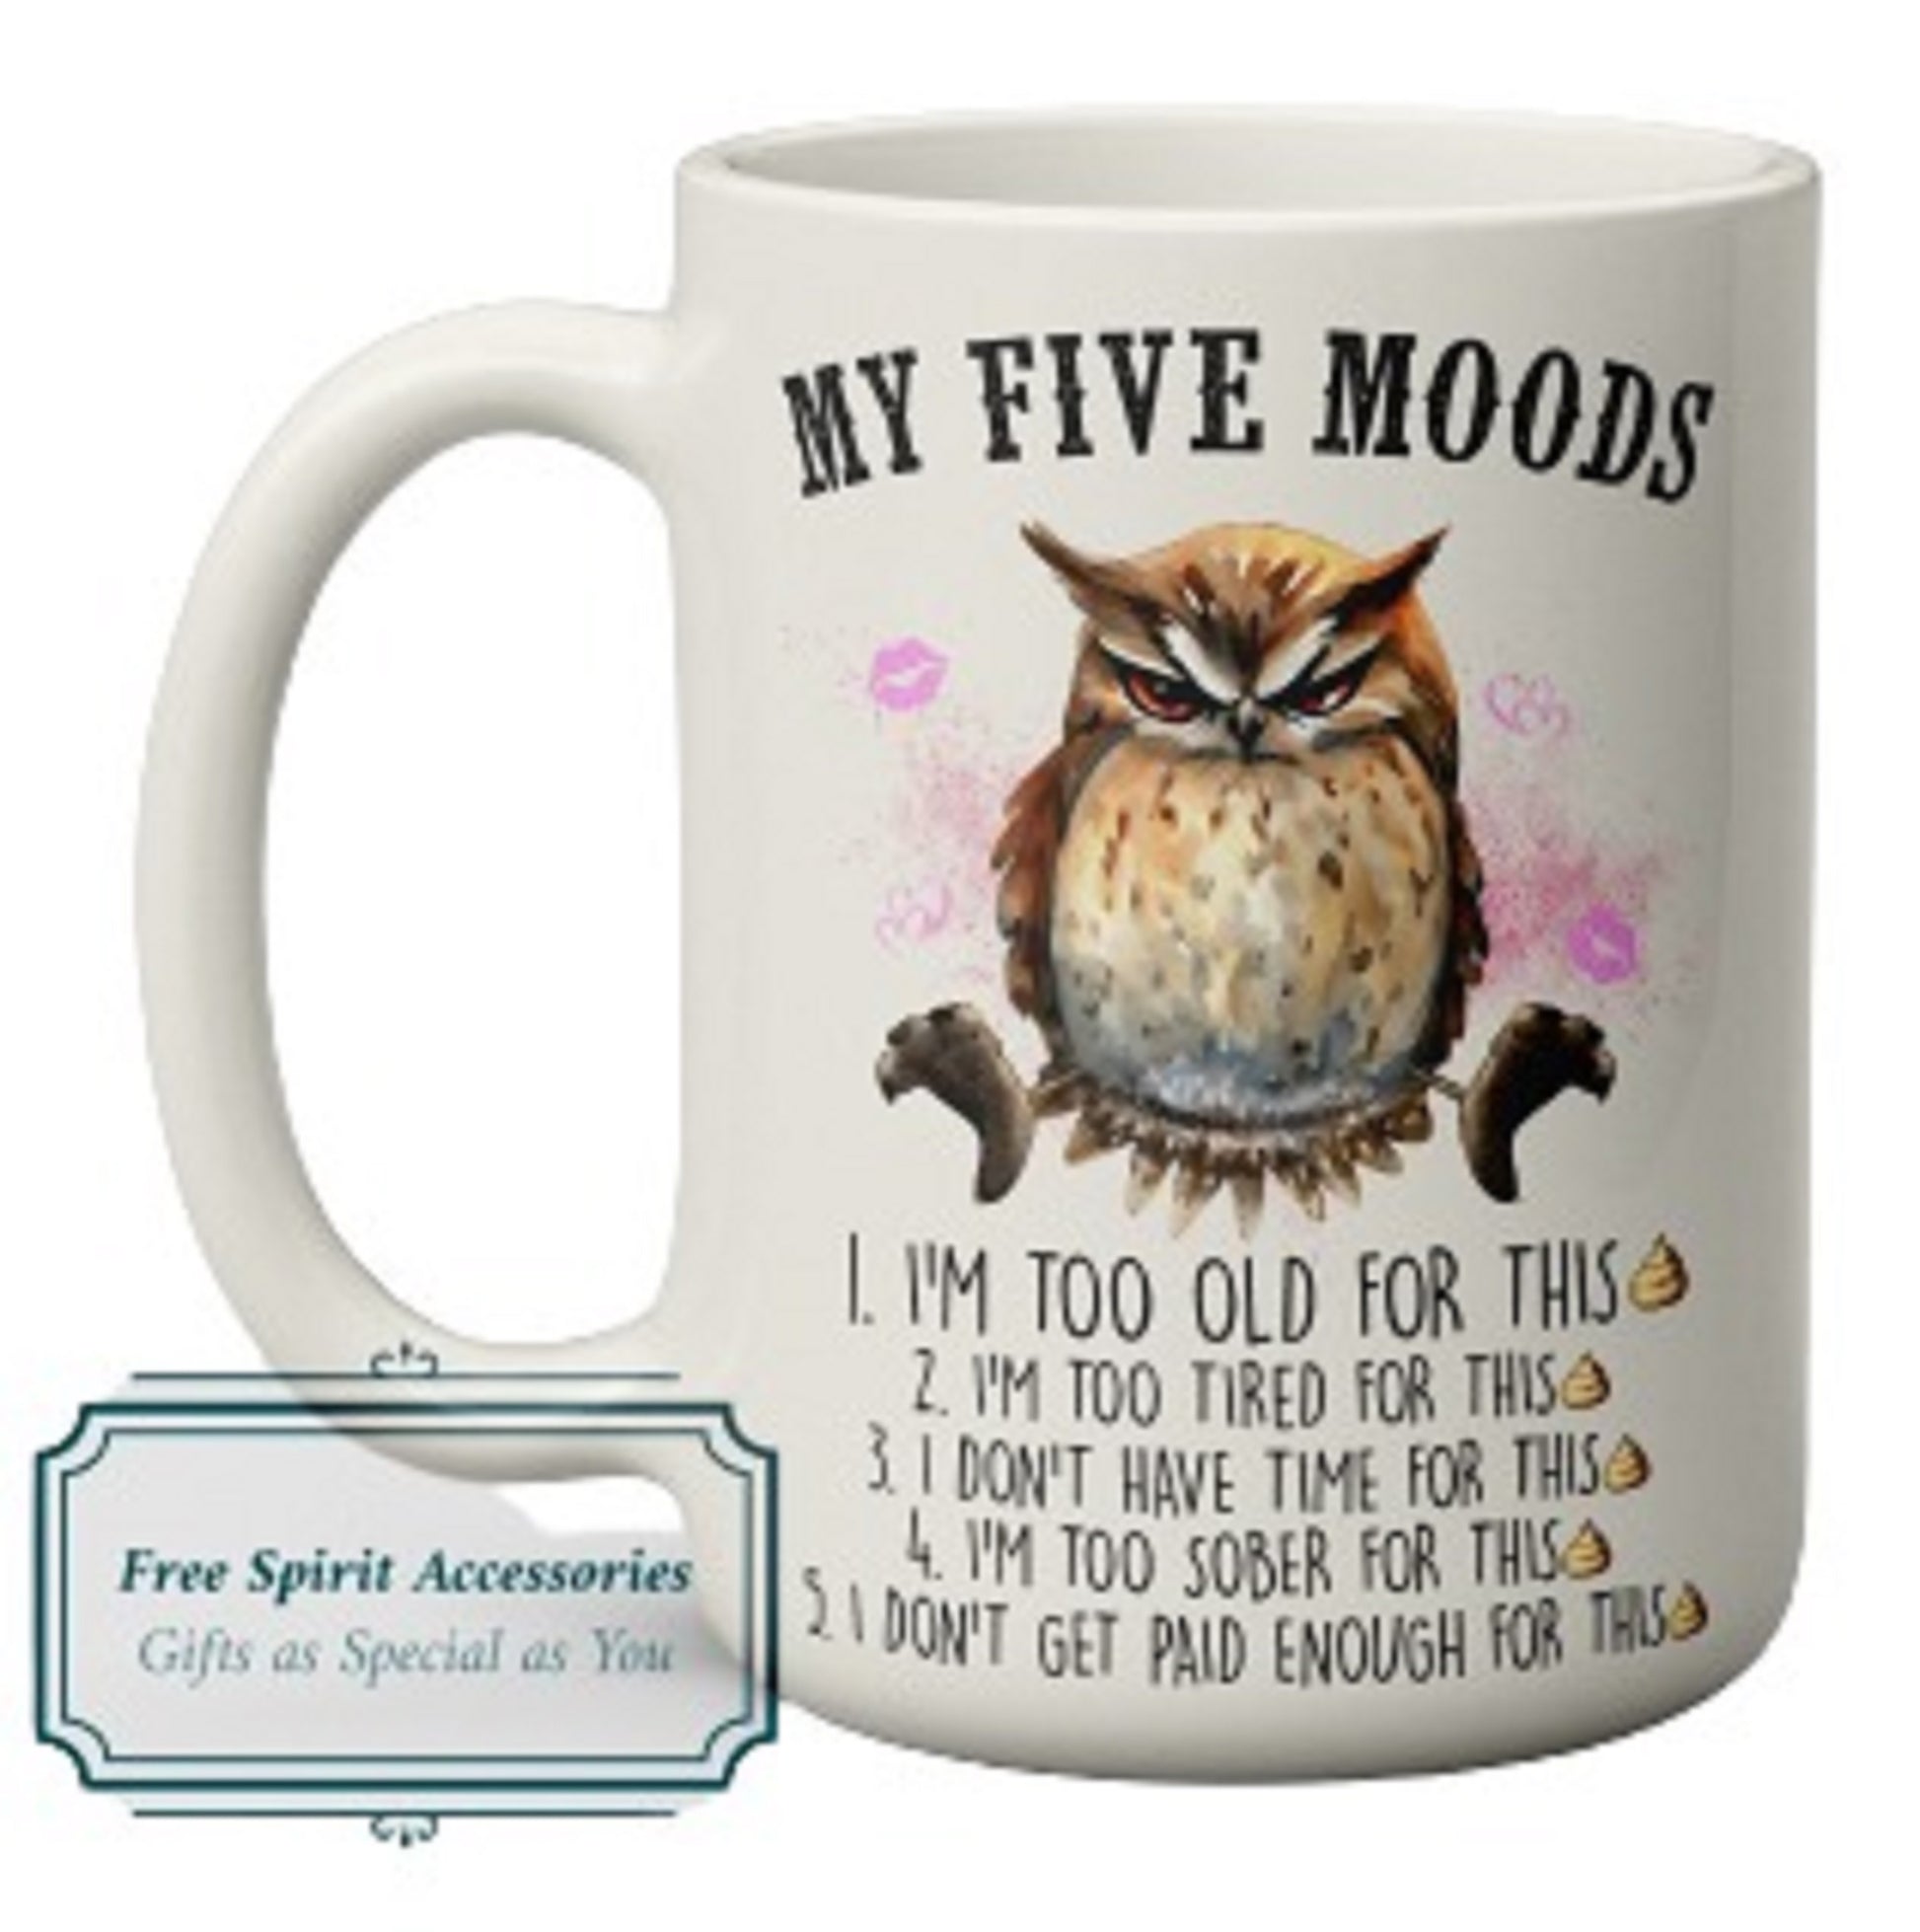  Funny My Five Moods Coffee Mug by Free Spirit Accessories sold by Free Spirit Accessories